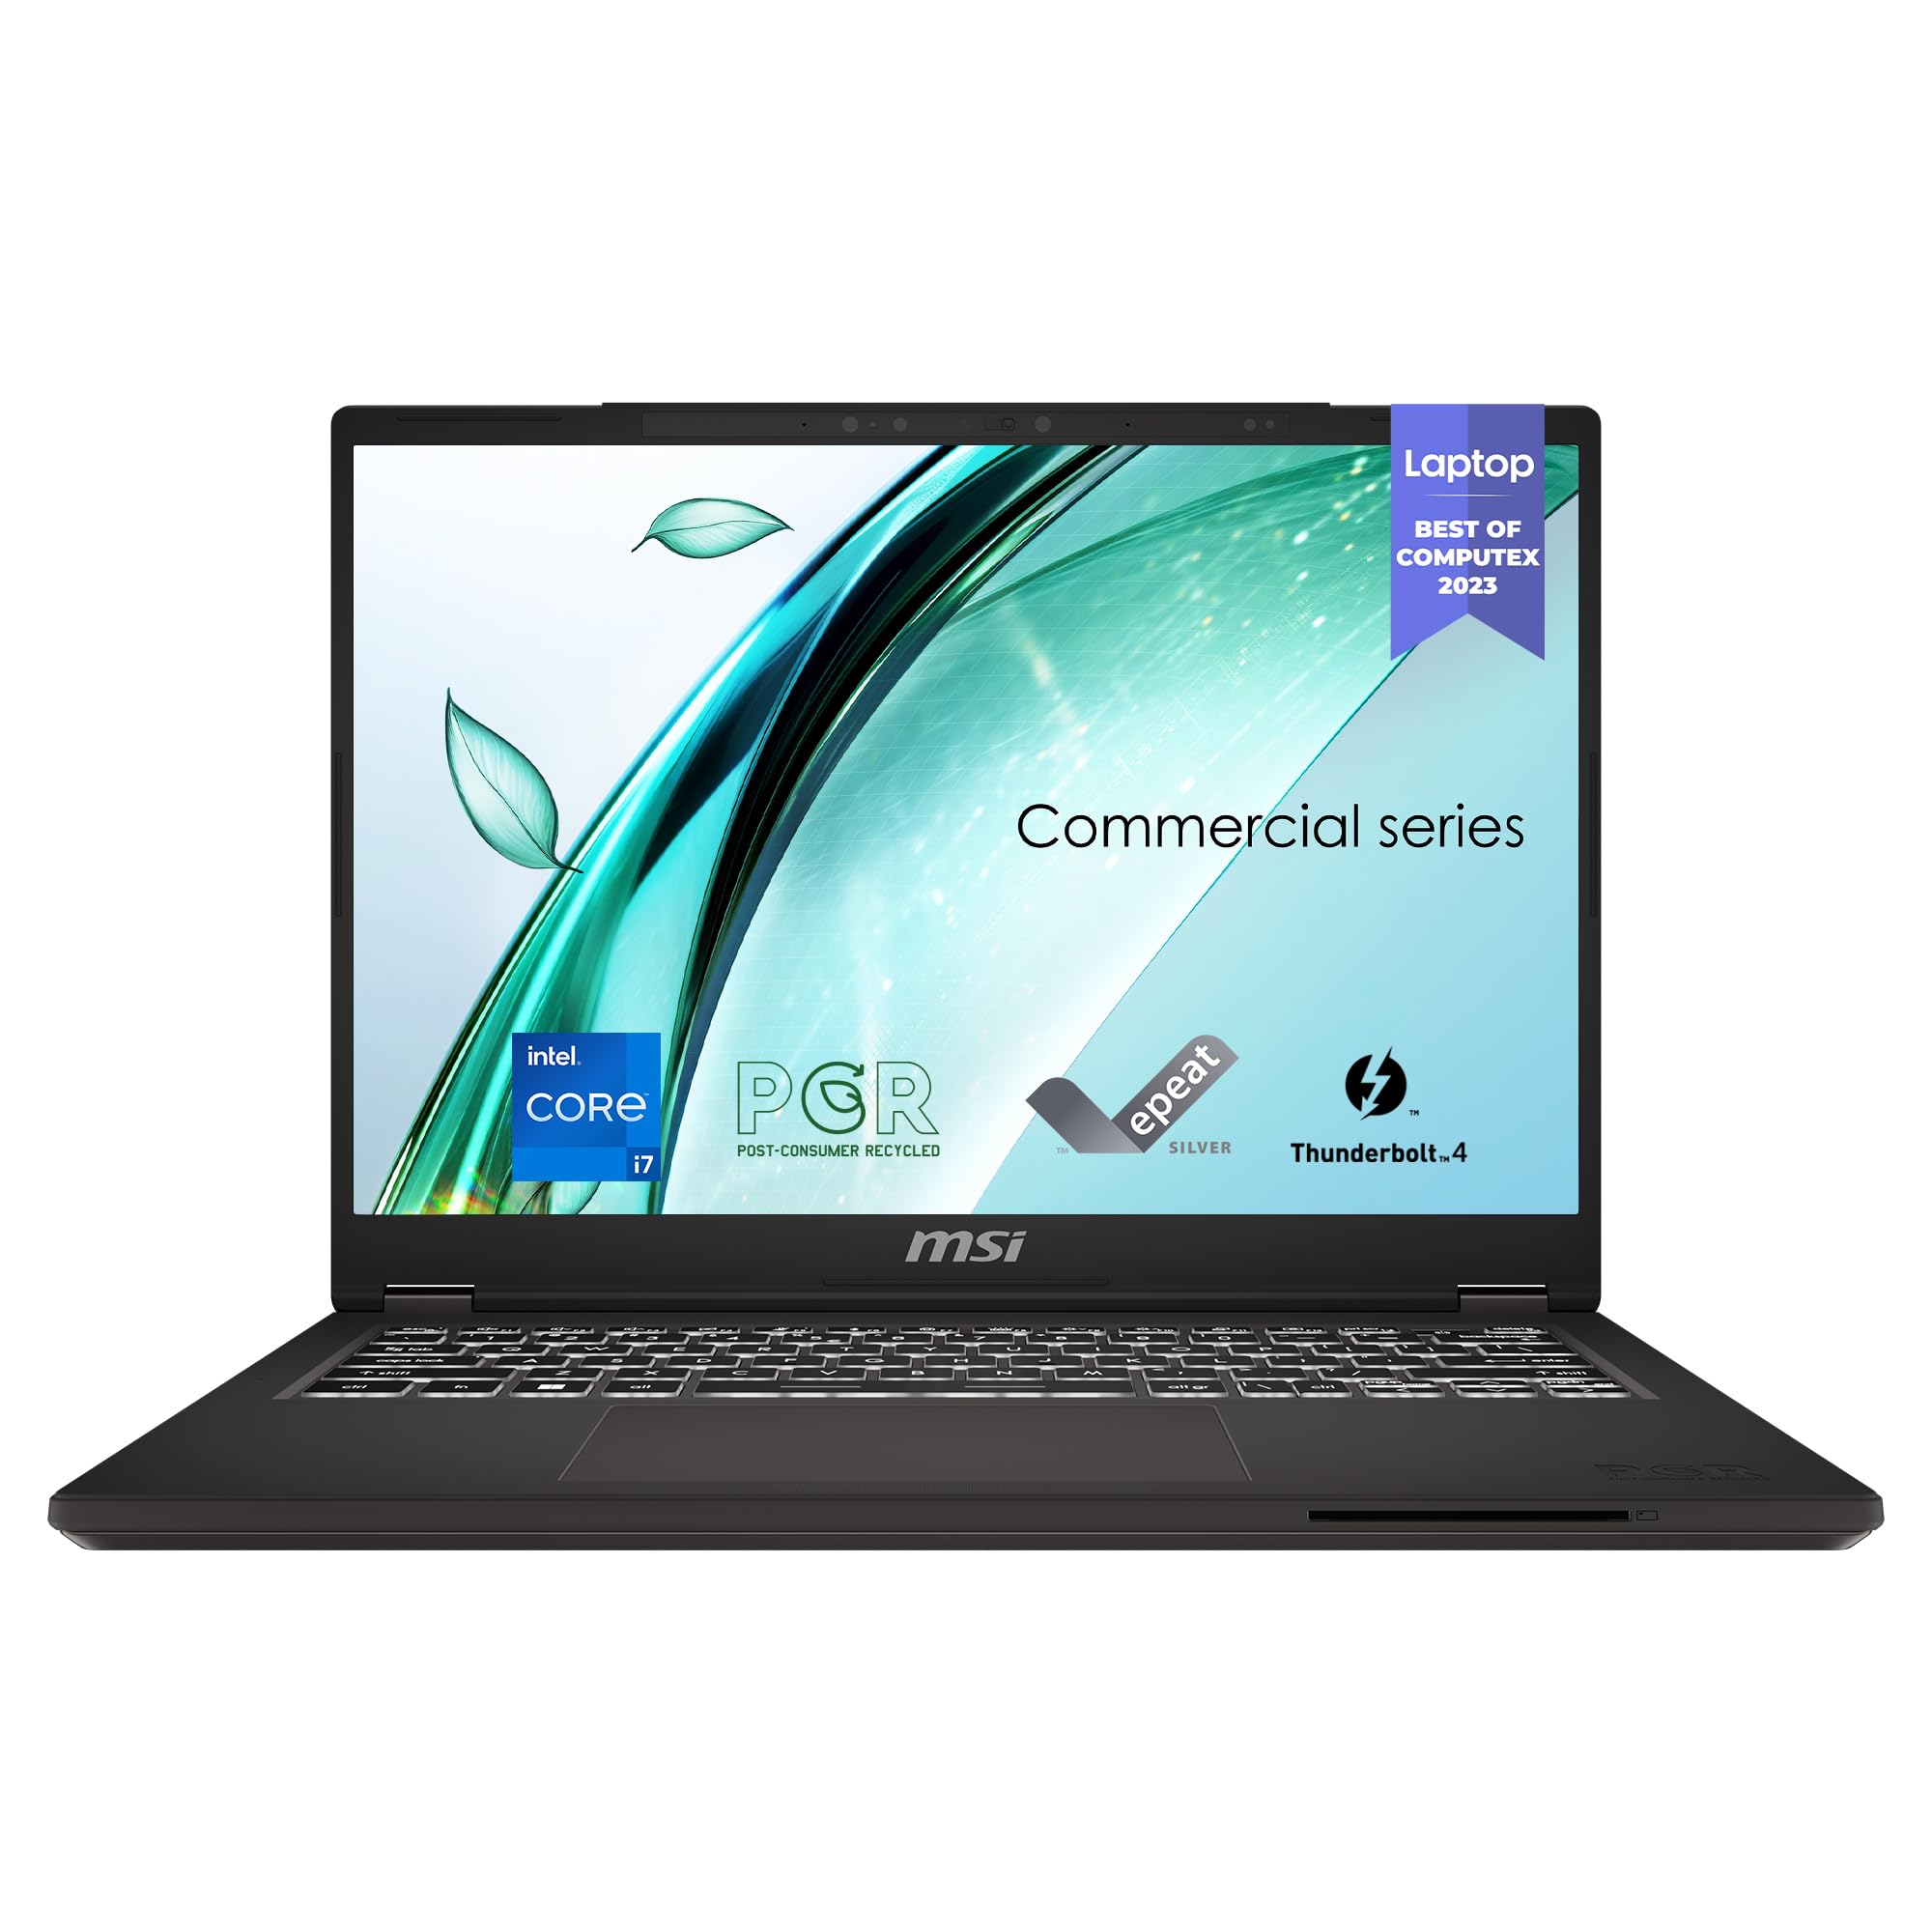 MSI Commercial 14 H Professional Laptop: 13th Gen Intel Core i7, 14” 60Hz Display, Intel Iris Xe, 32GB DDR4, 1TB NVMe SSD, Eco-Friendly, Fingerprint Reader, Win 11 Pro: A13MG-003US